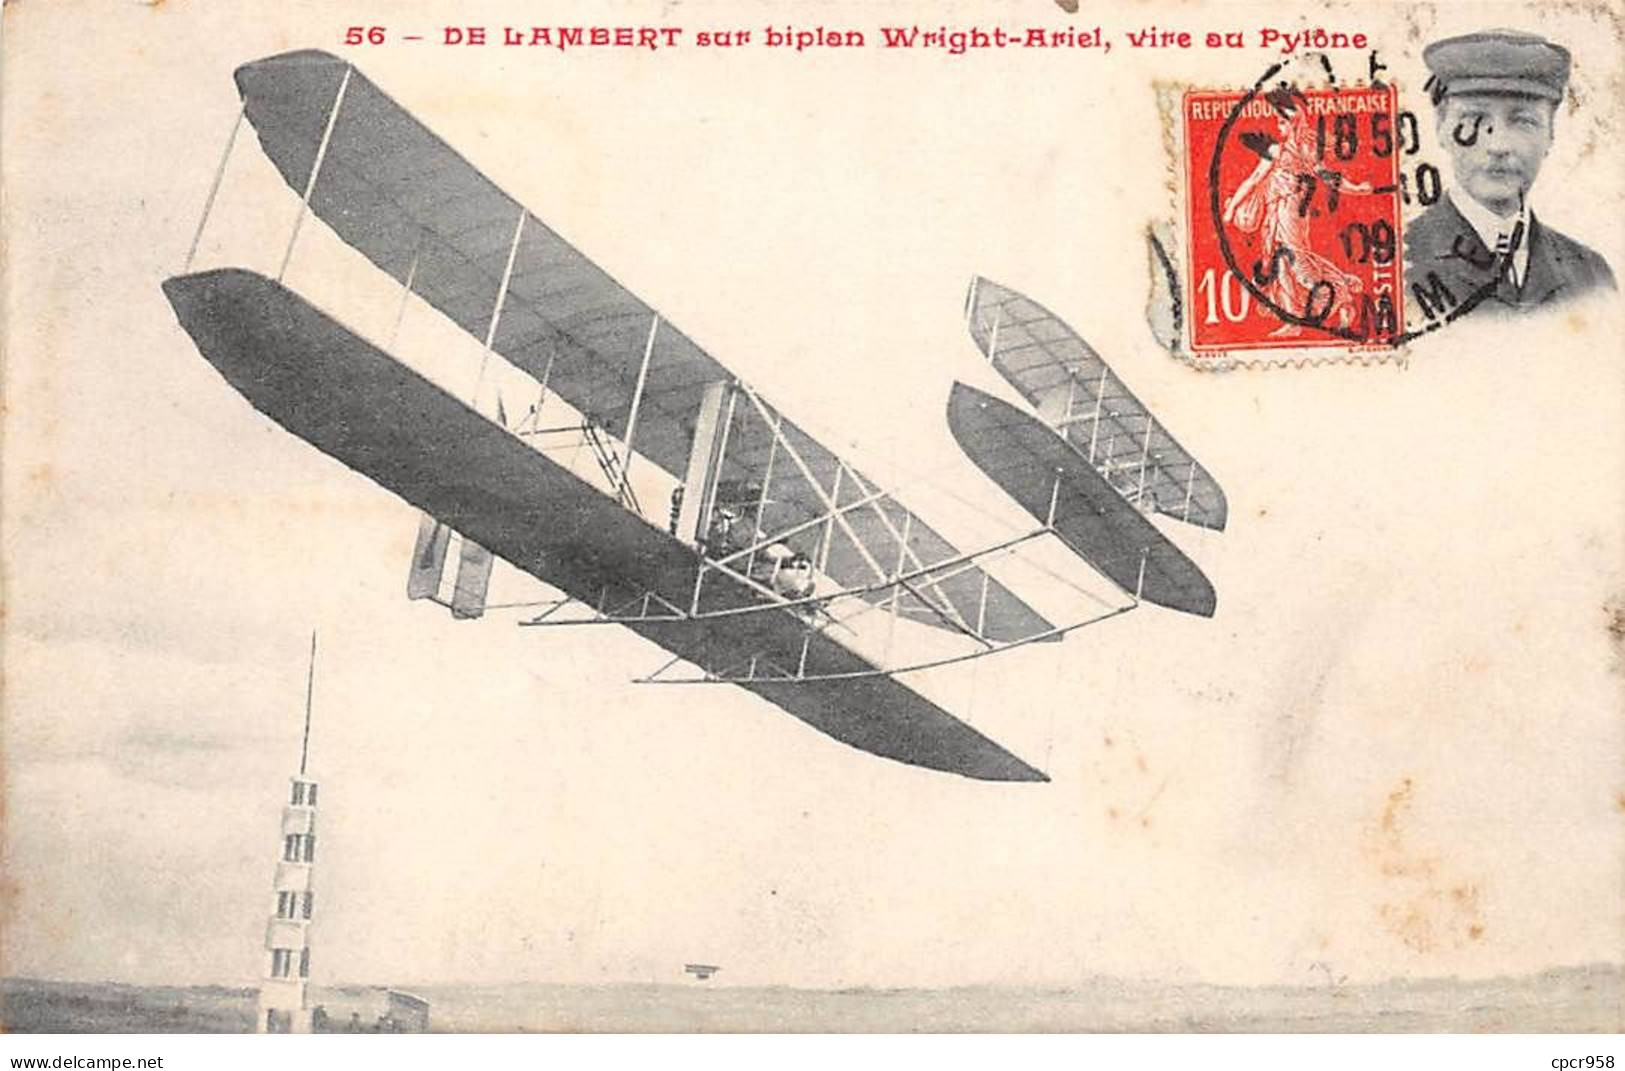 Aviation - N°81335 - De Lambert Sur Biplan Wright-Ariel, Vire Au Pylône - Flieger